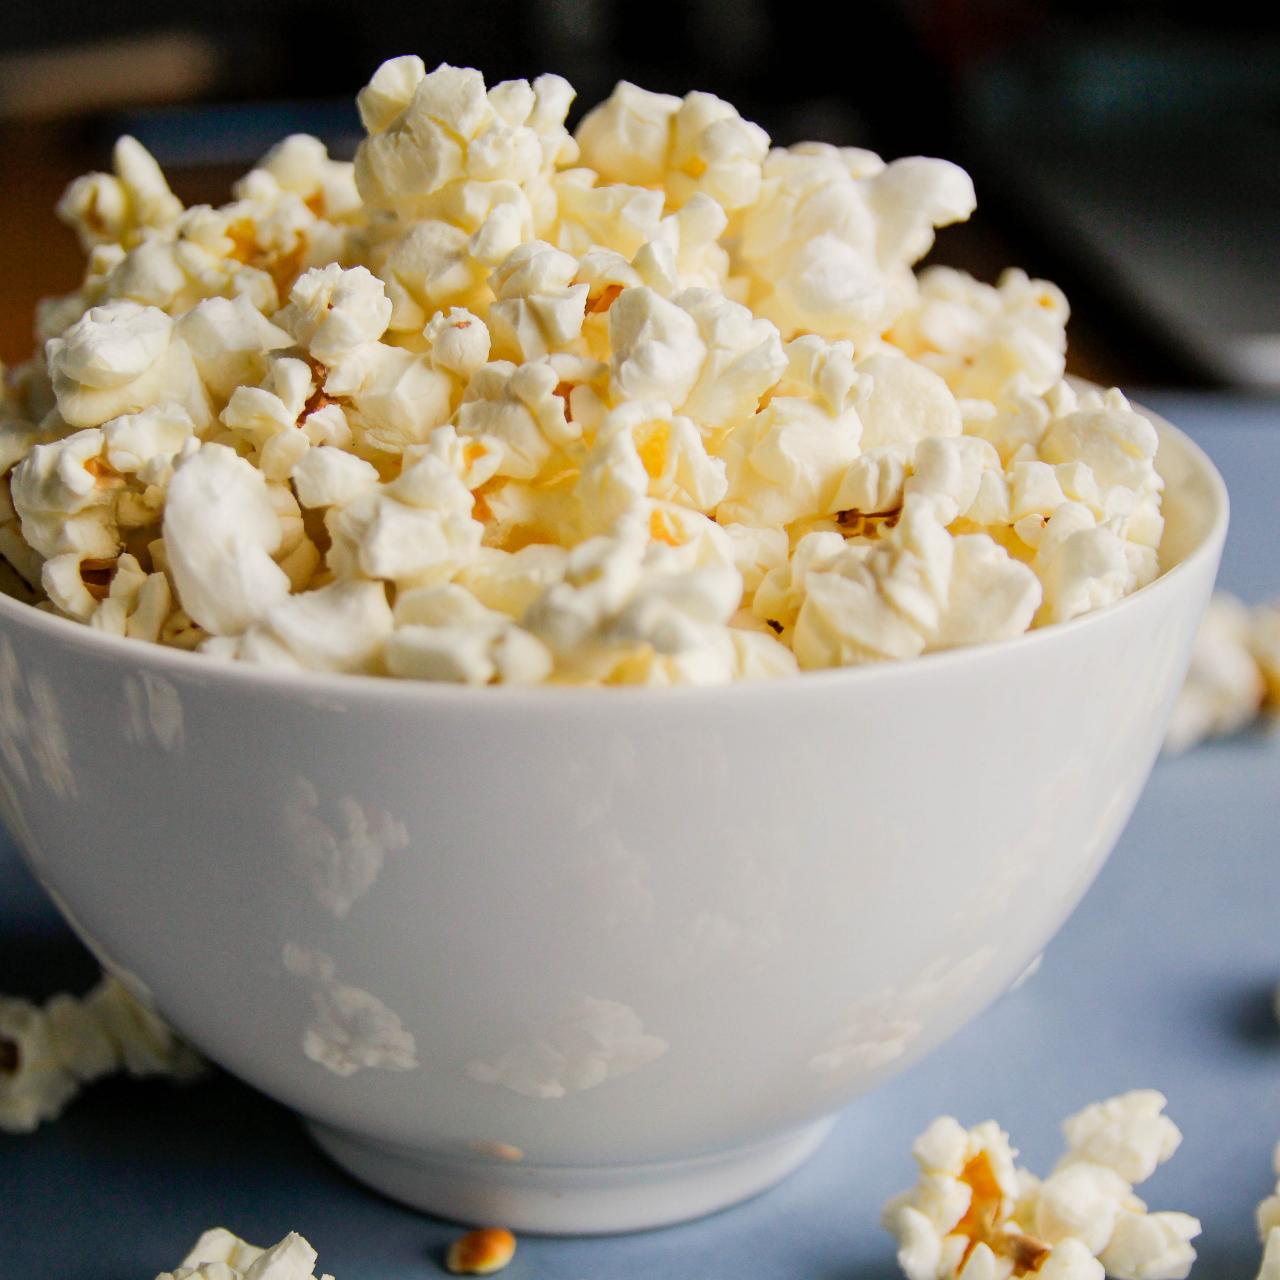 https://food.fnr.sndimg.com/content/dam/images/food/fullset/2023/2/14/popcorn-in-white-bowl-on-blue-surface.jpg.rend.hgtvcom.1280.1280.suffix/1676483406371.jpeg